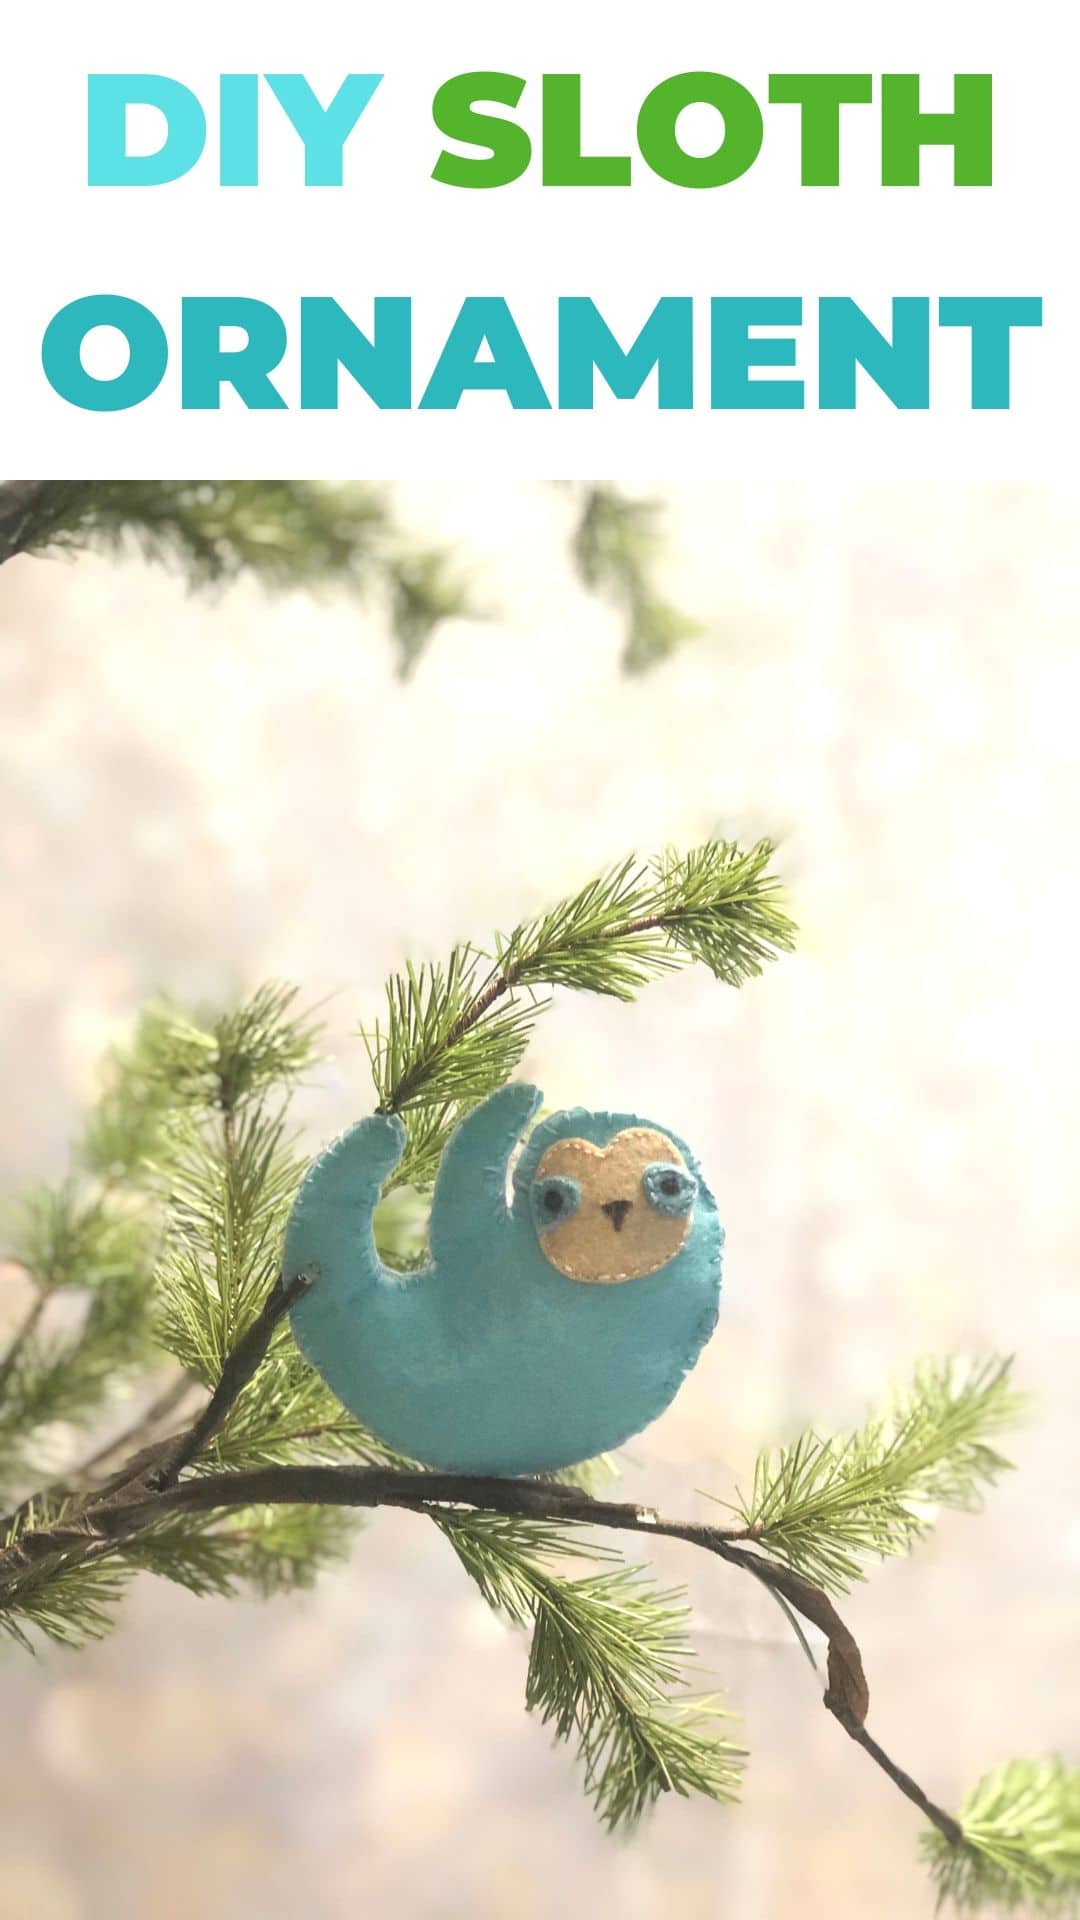 DIY Sloth Ornament via @brookeberry